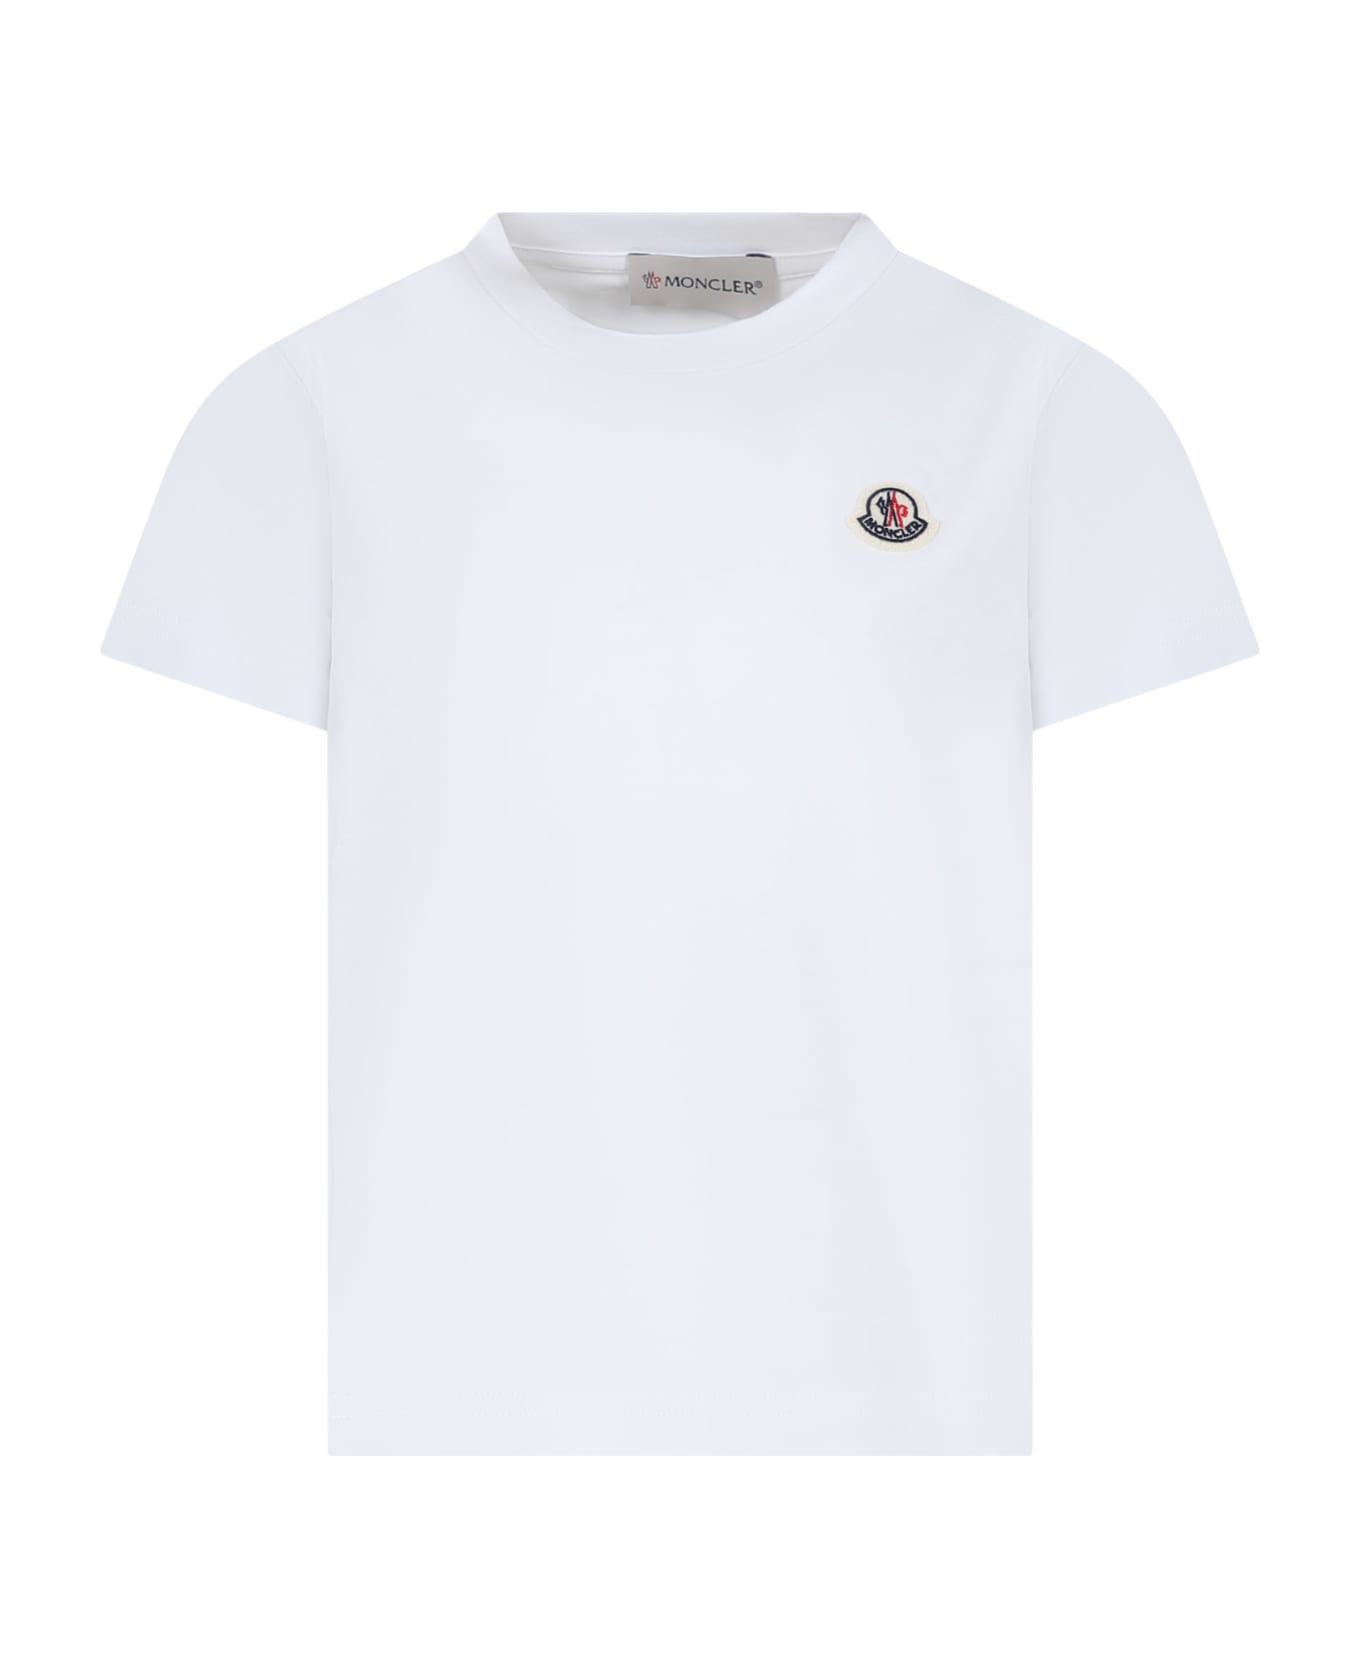 Moncler White T-shirt For Kids With Logo - White